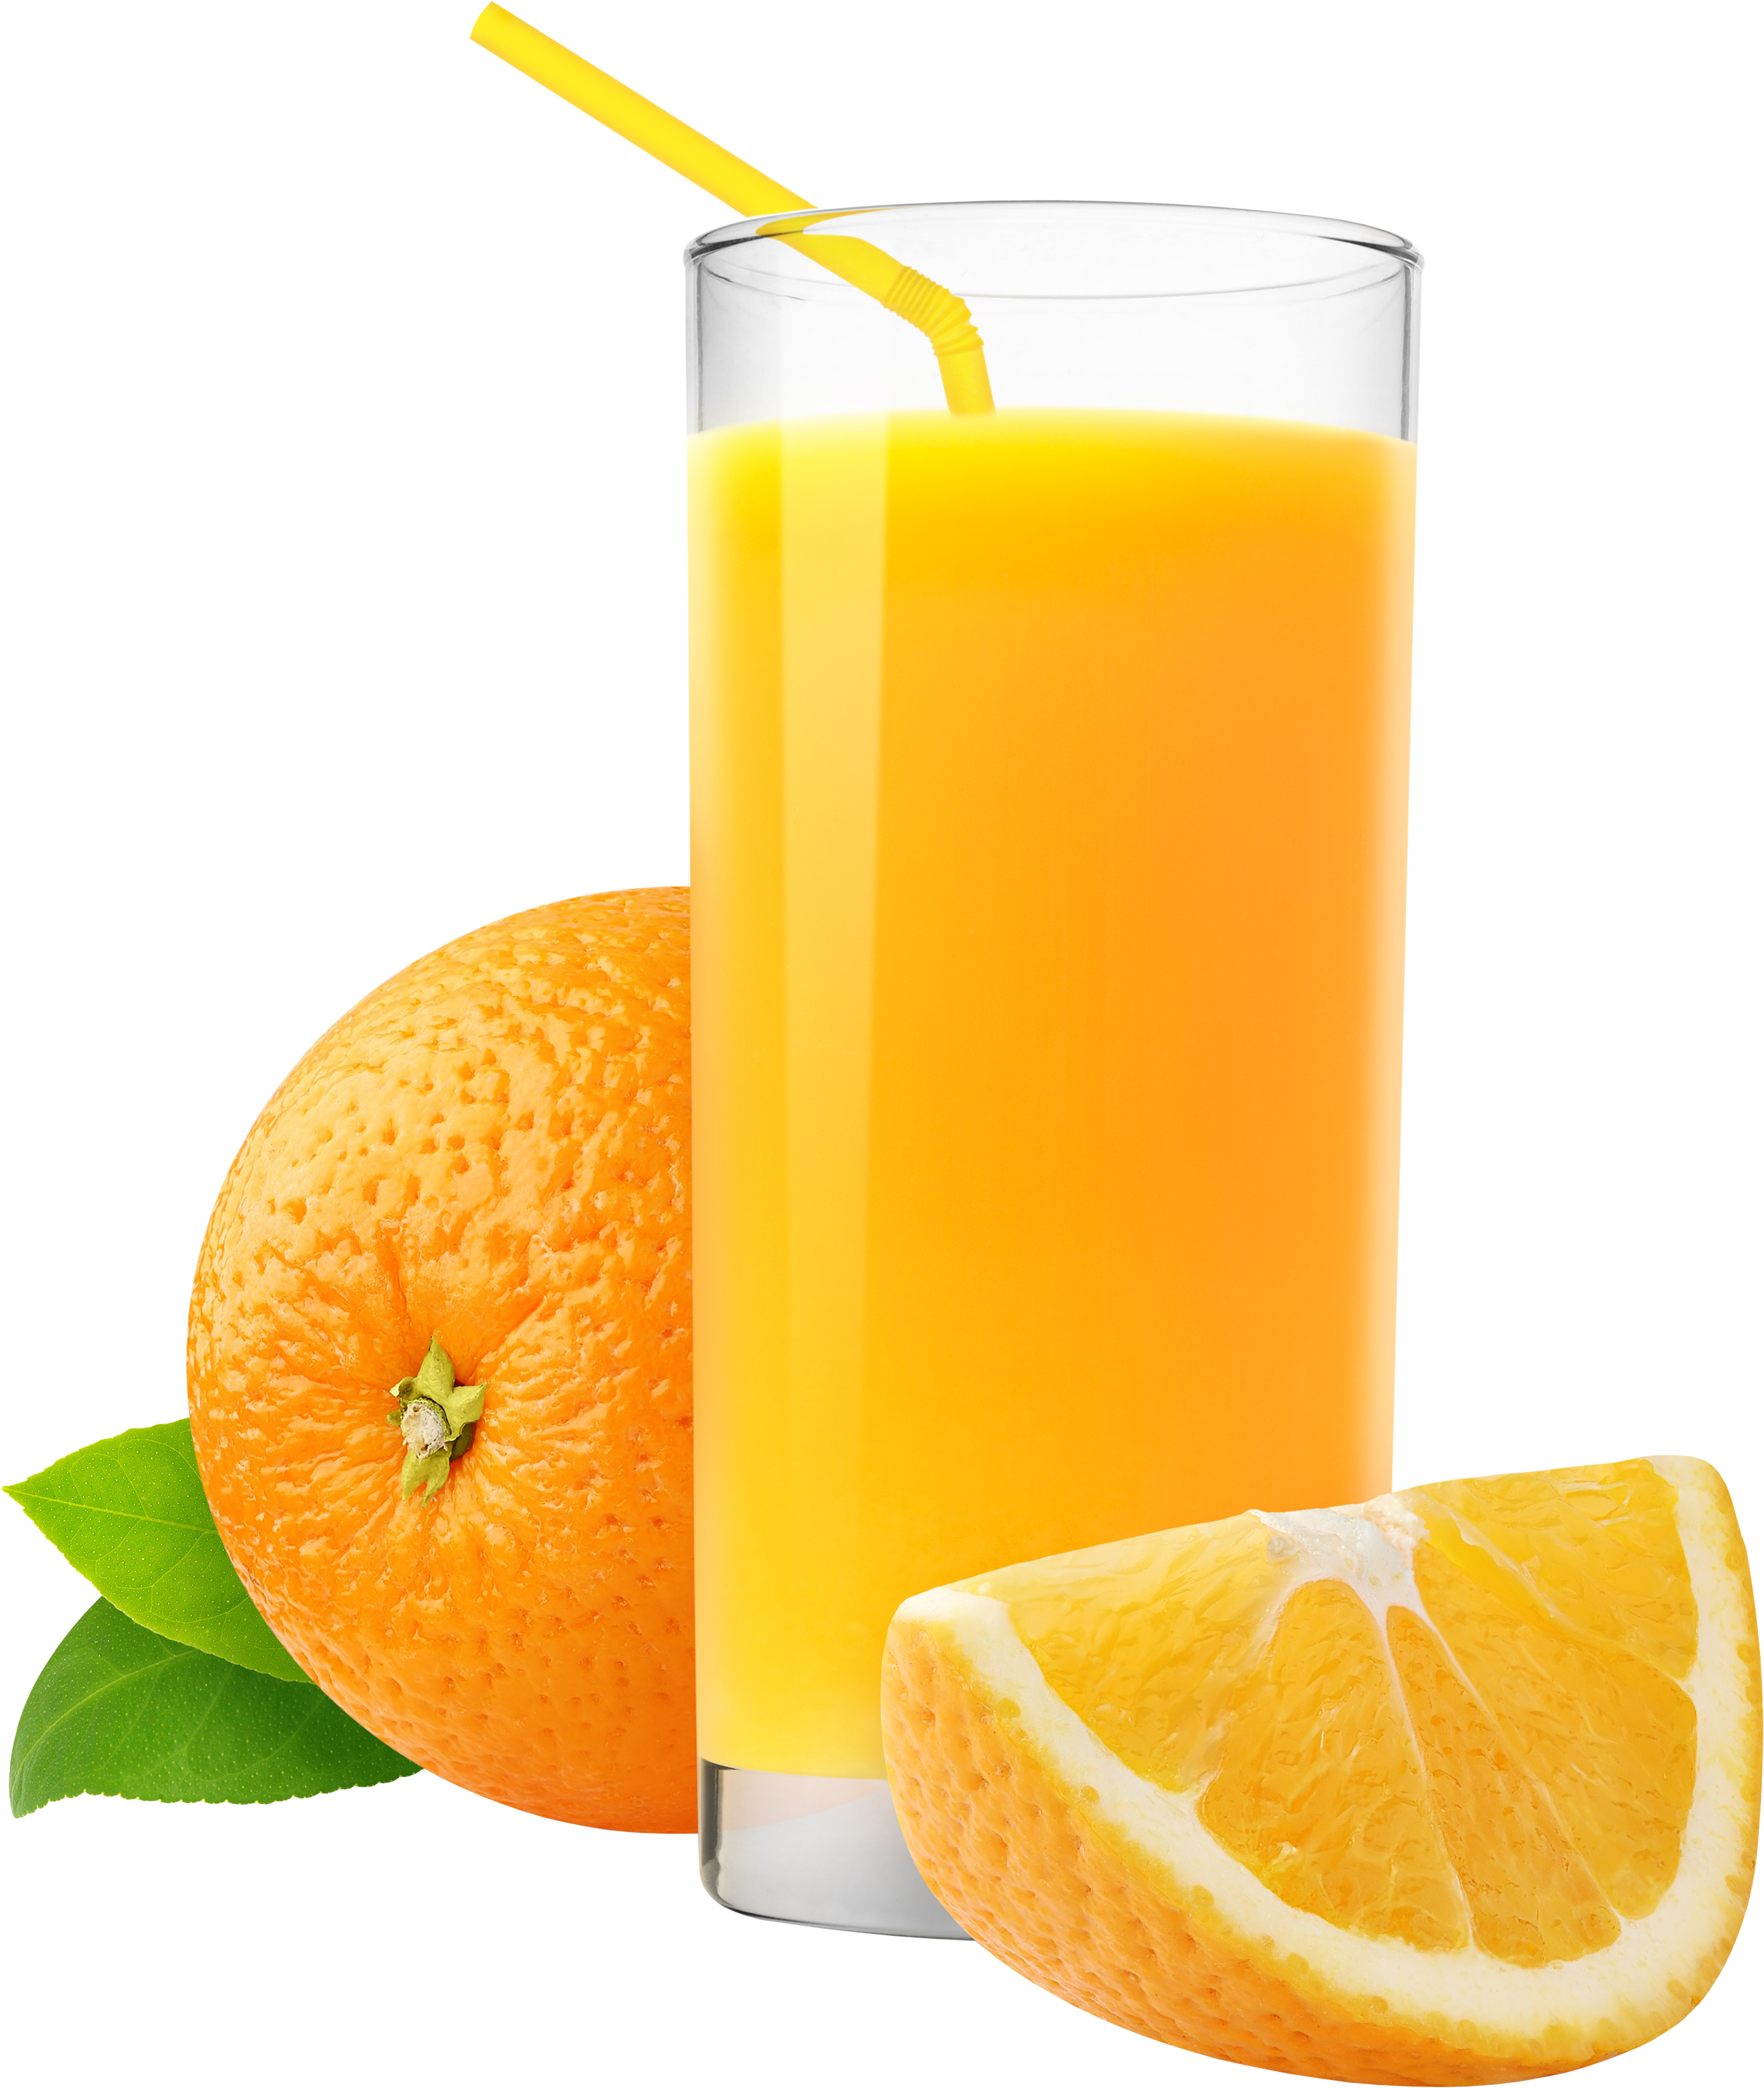 Orange Juice PNG